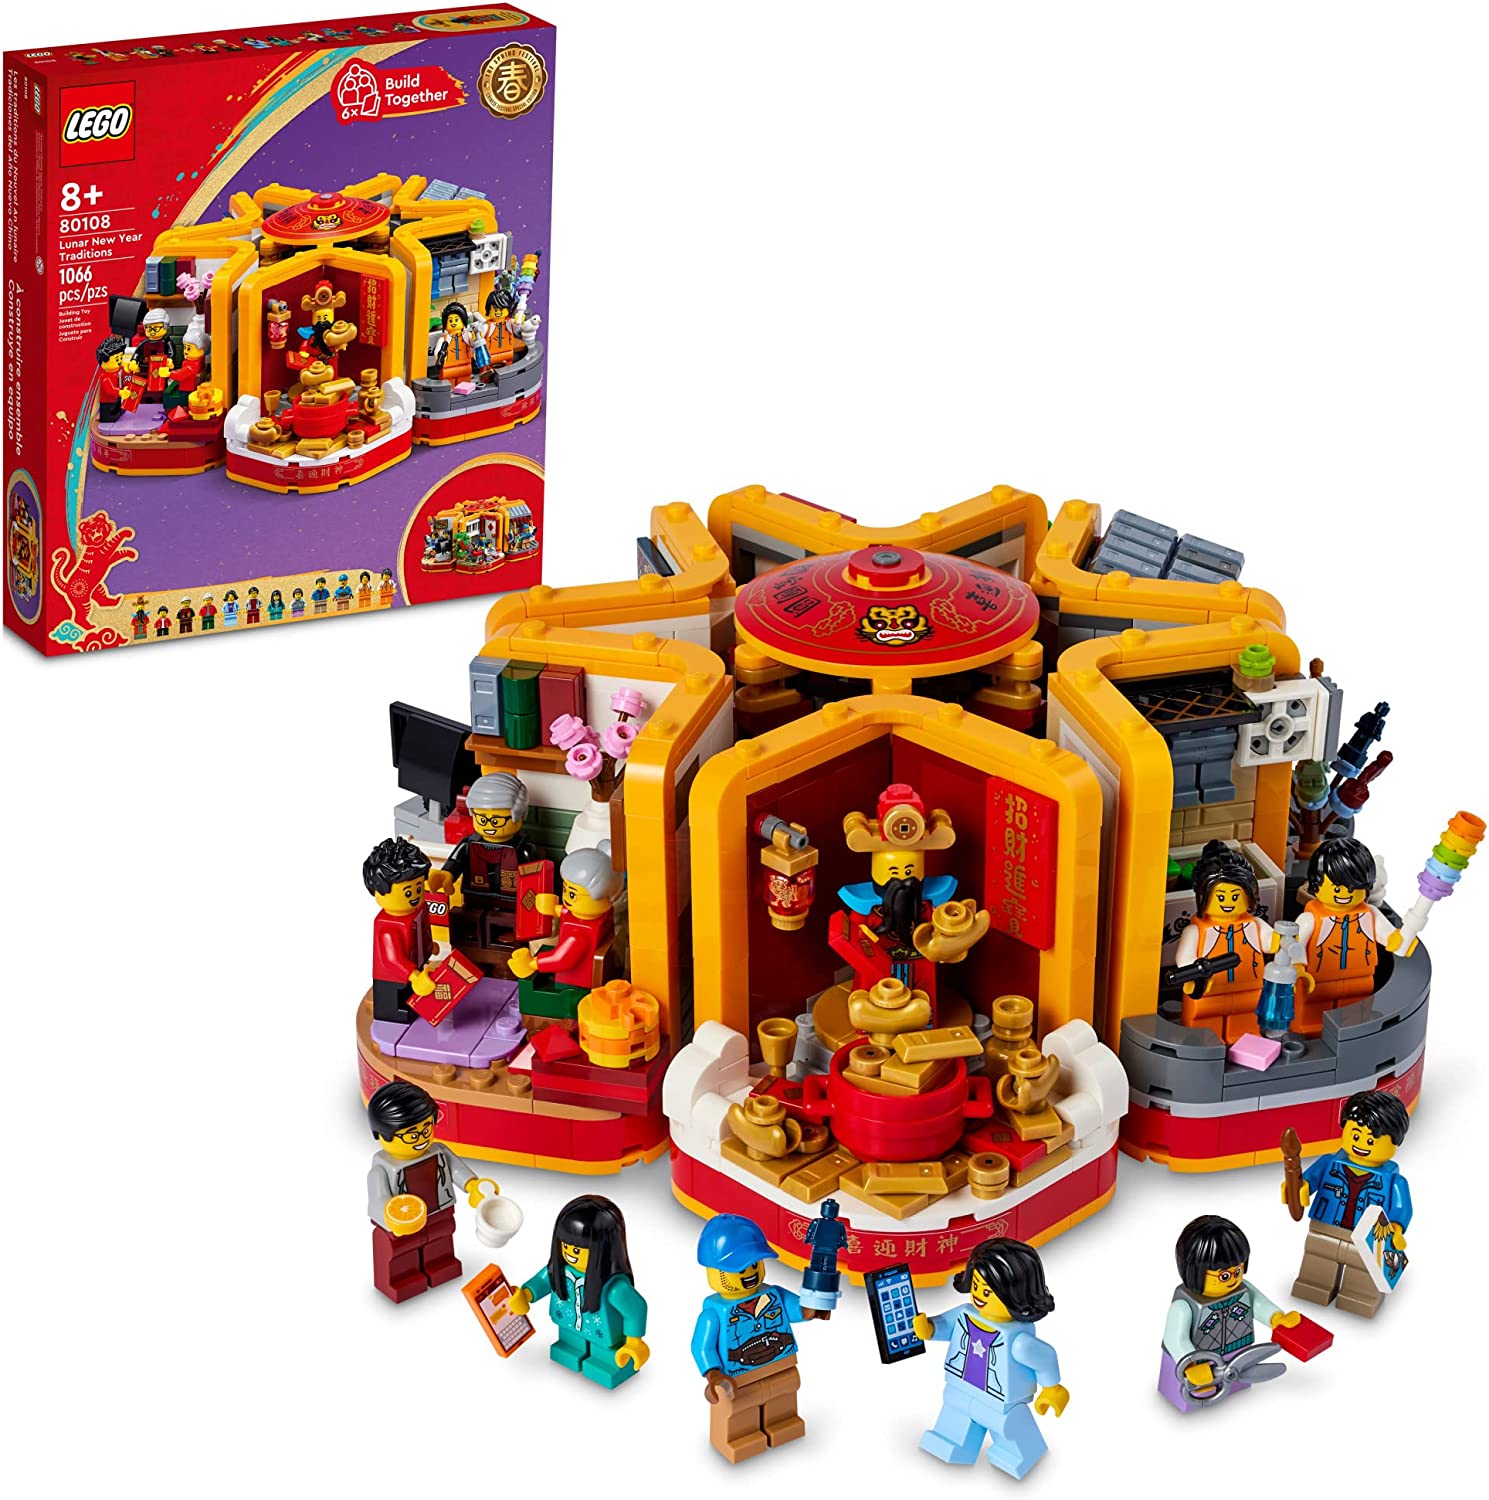 LEGO Lunar New Year Traditions (80108) Amazon Sale